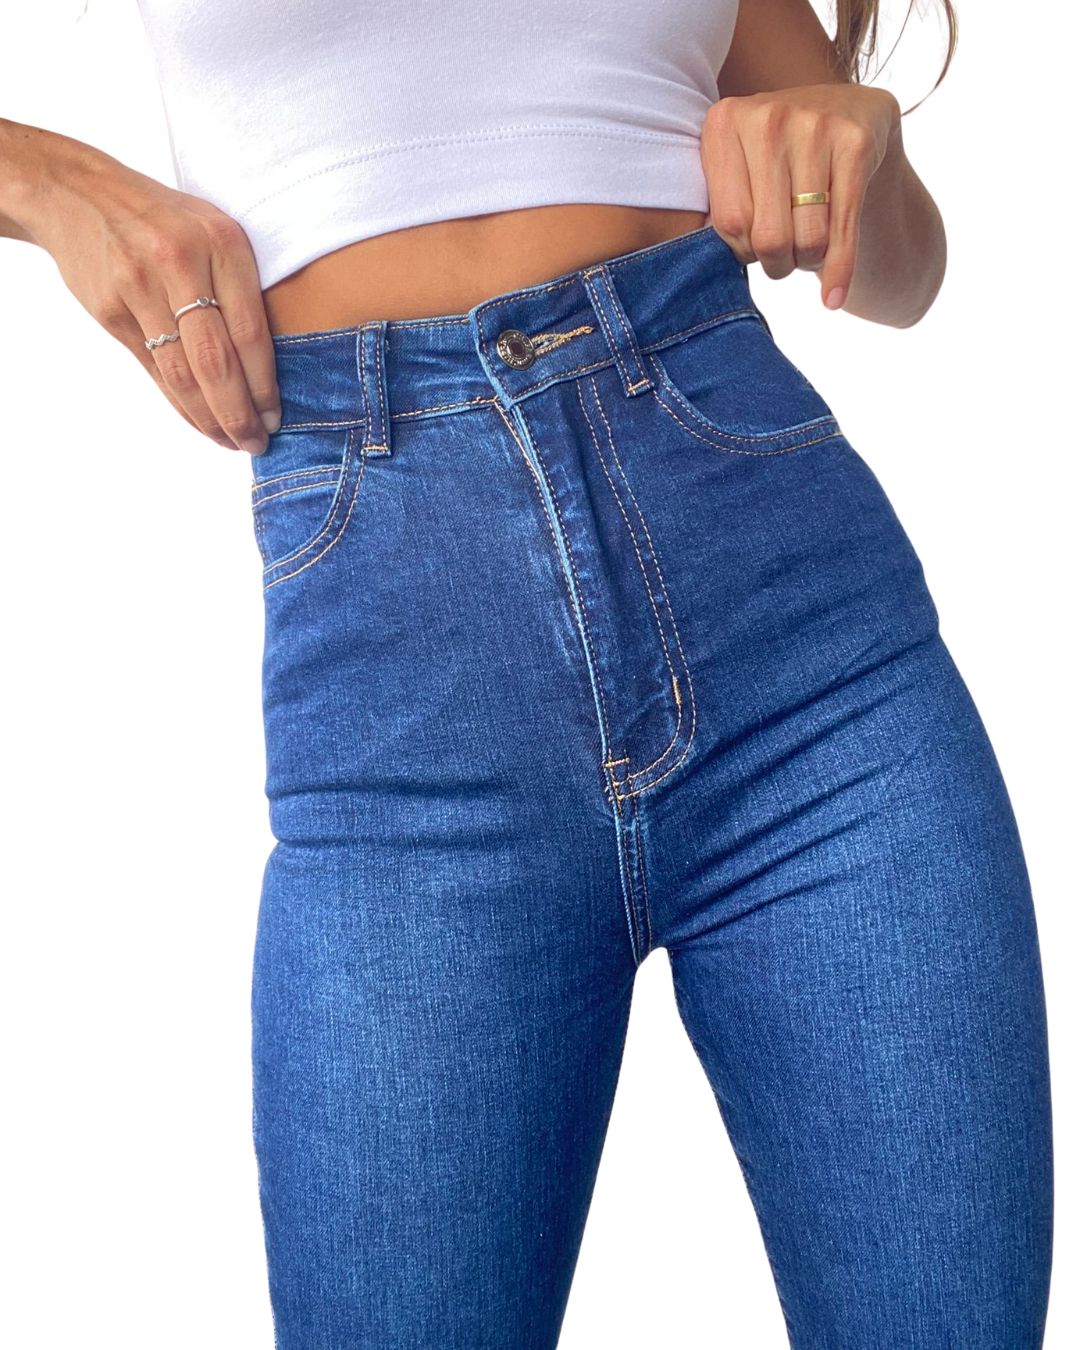 Gunas High-Rise Skinny Jean #FlatteringFit